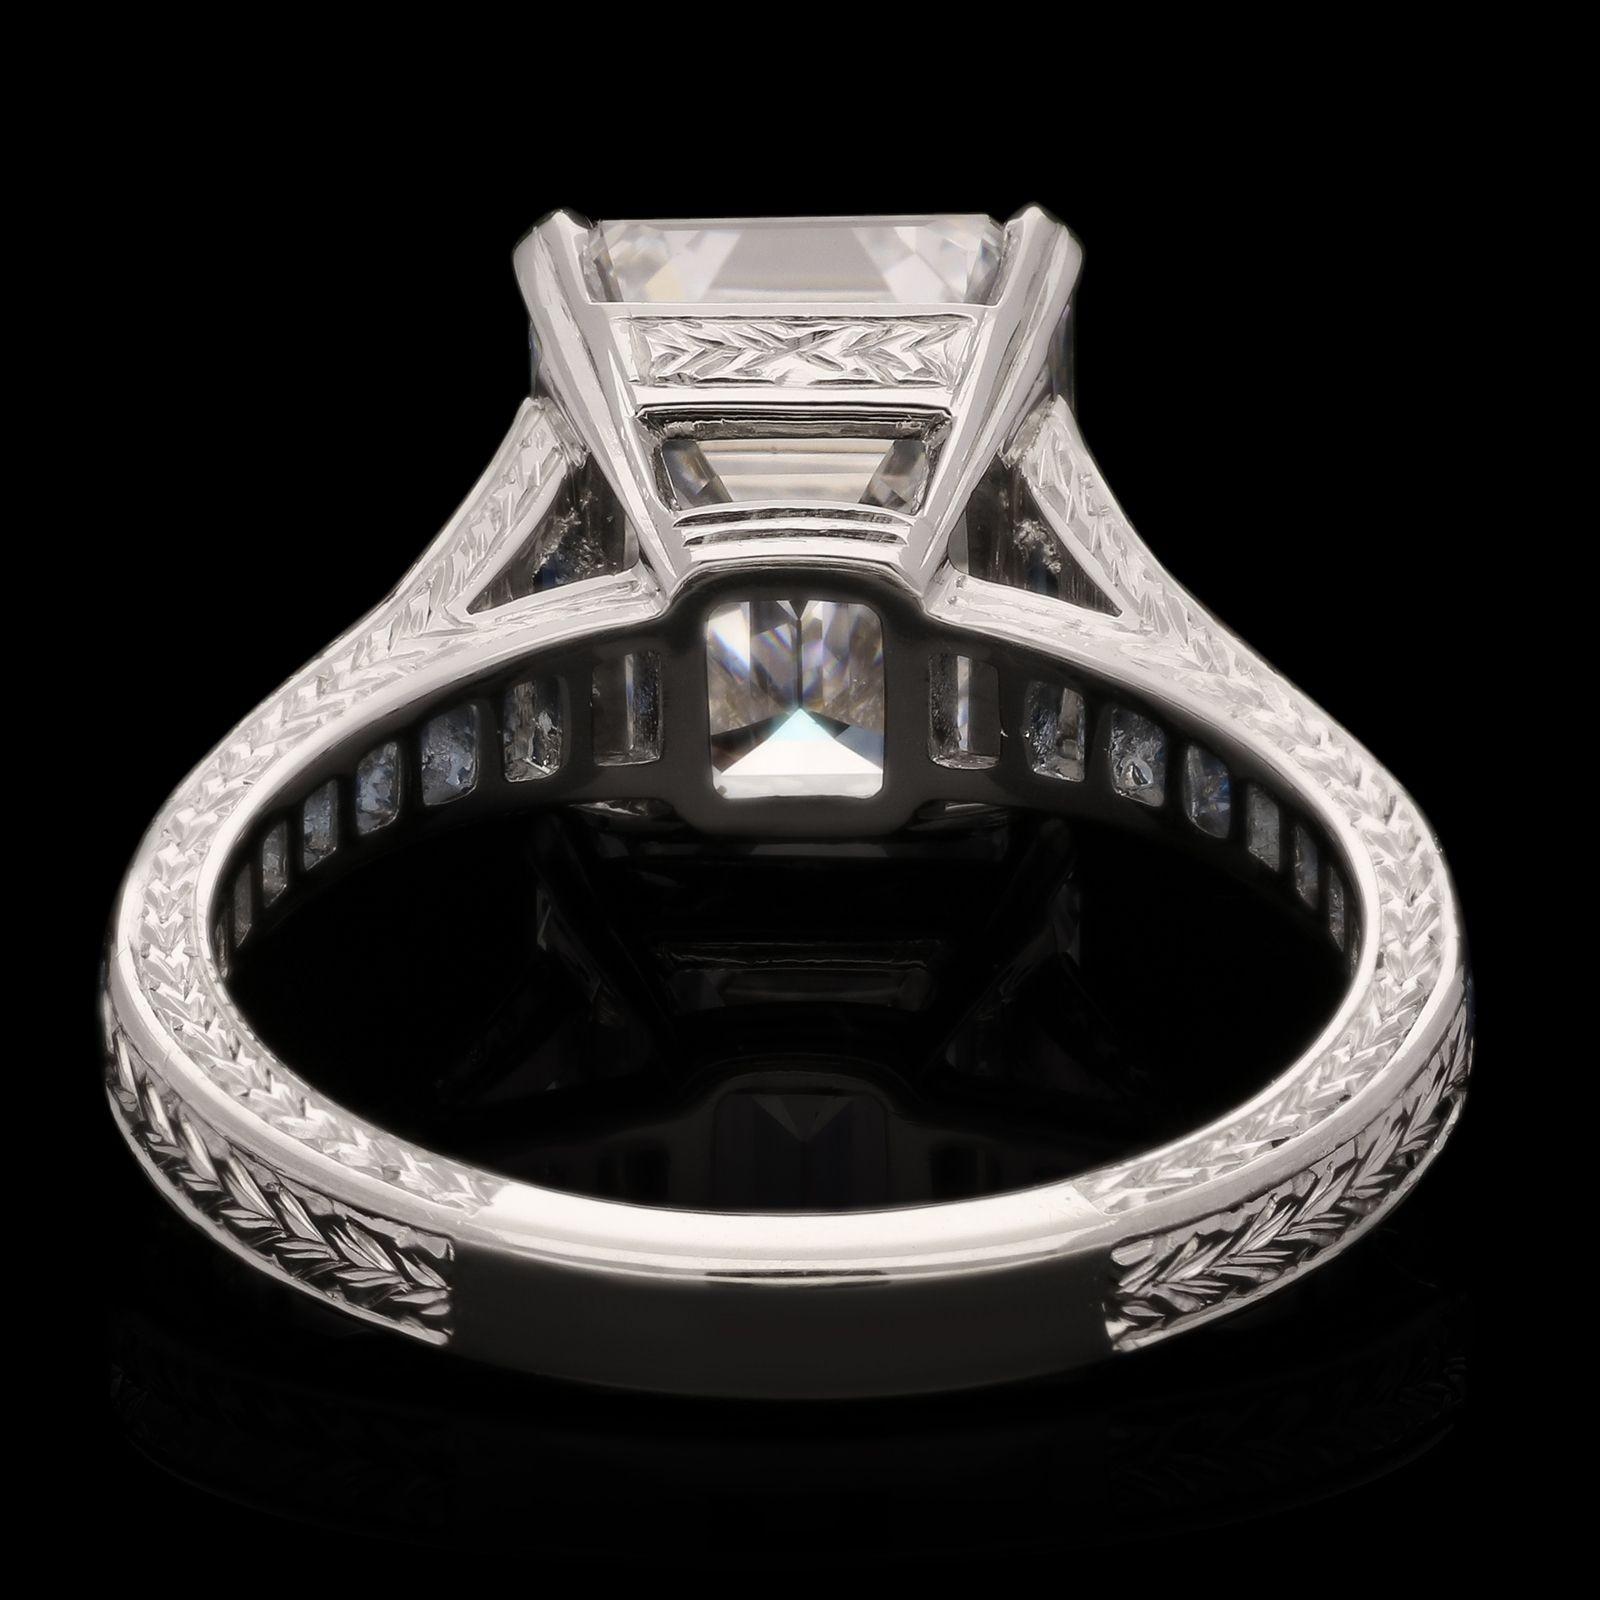 Hancocks 4.48ct Emerald Cut Diamond Ring with Aquamarine Shoulders in Platinum For Sale 1